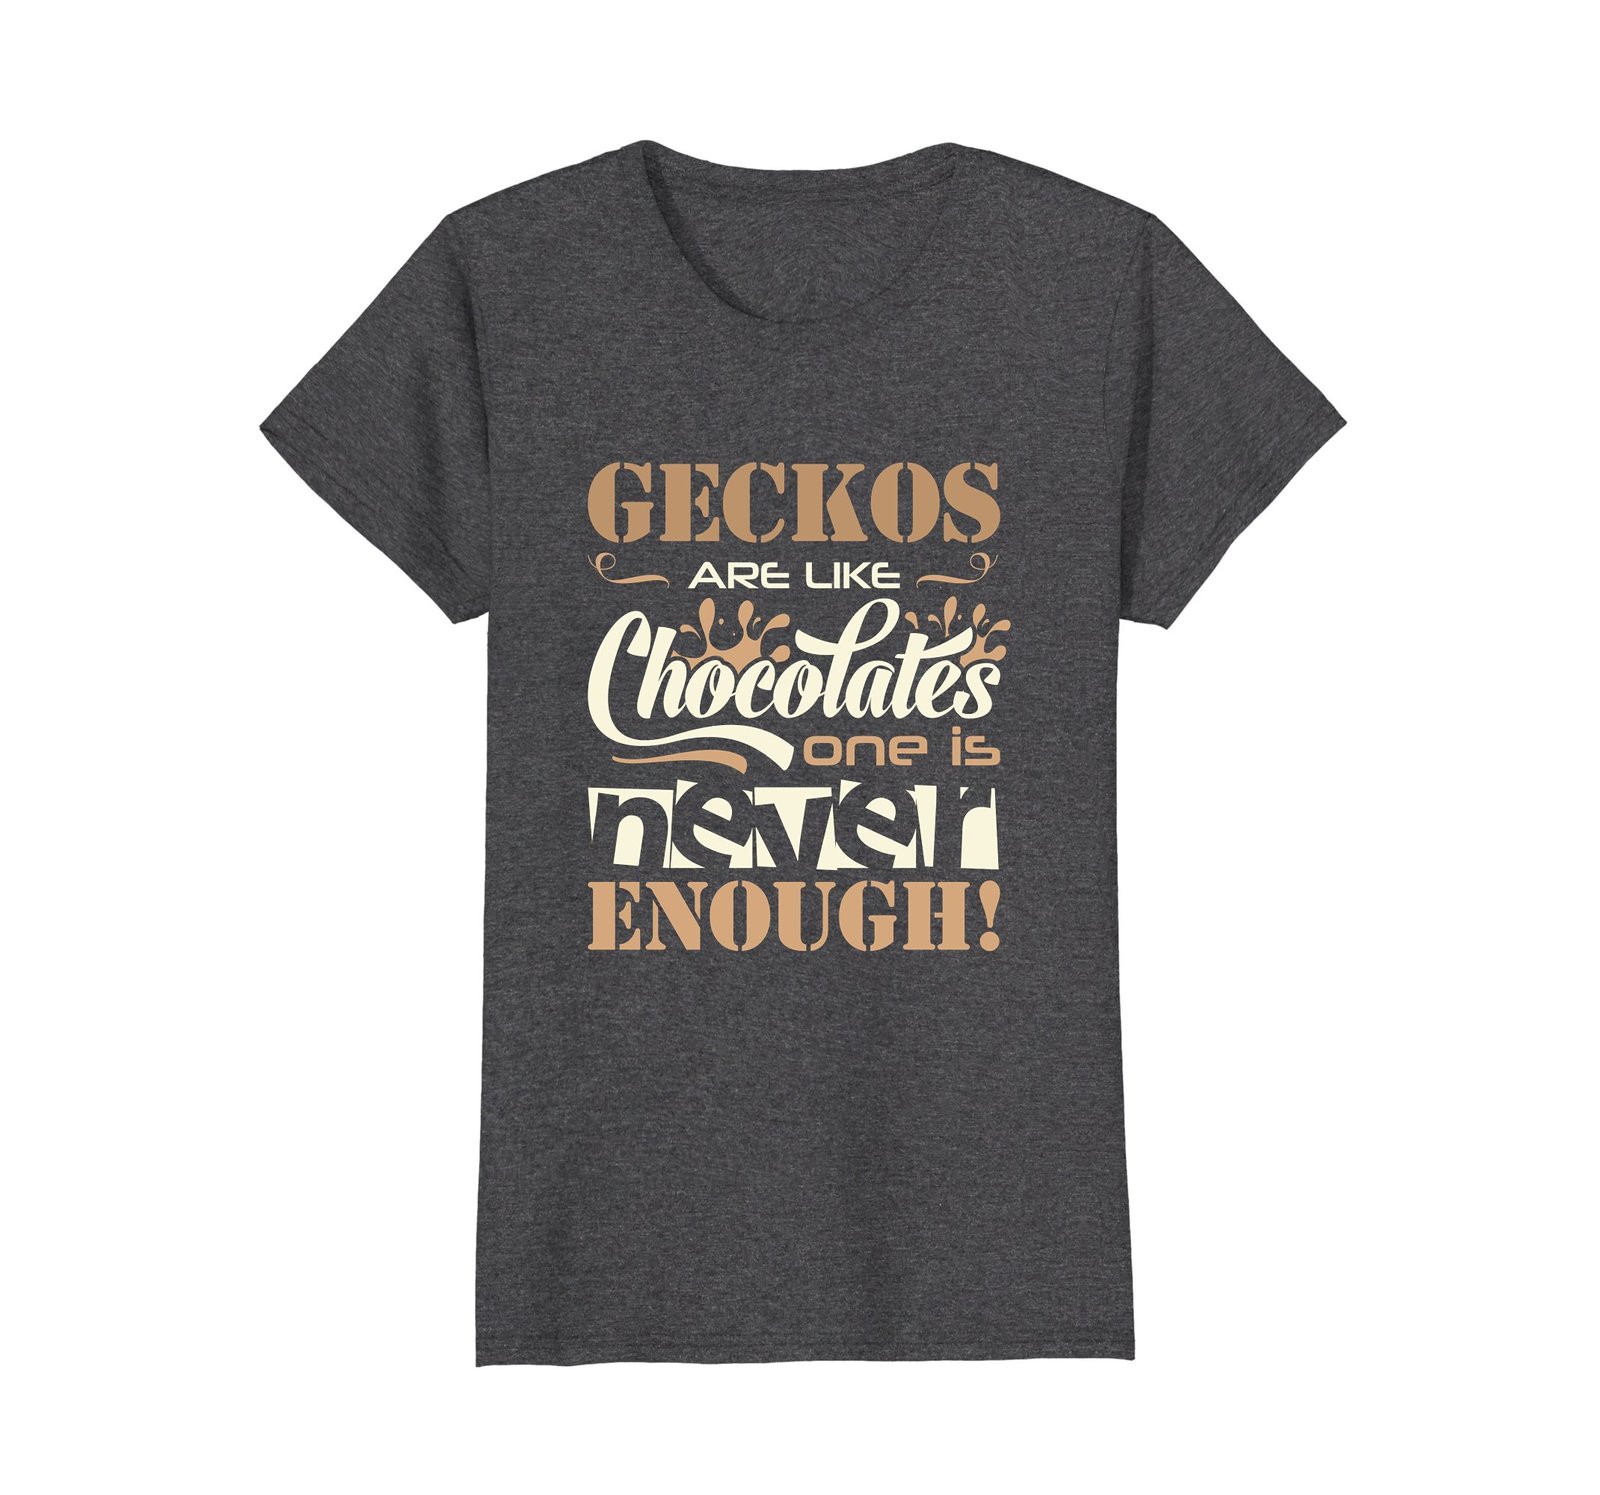 Geckos are Like Chocolate - $19.99